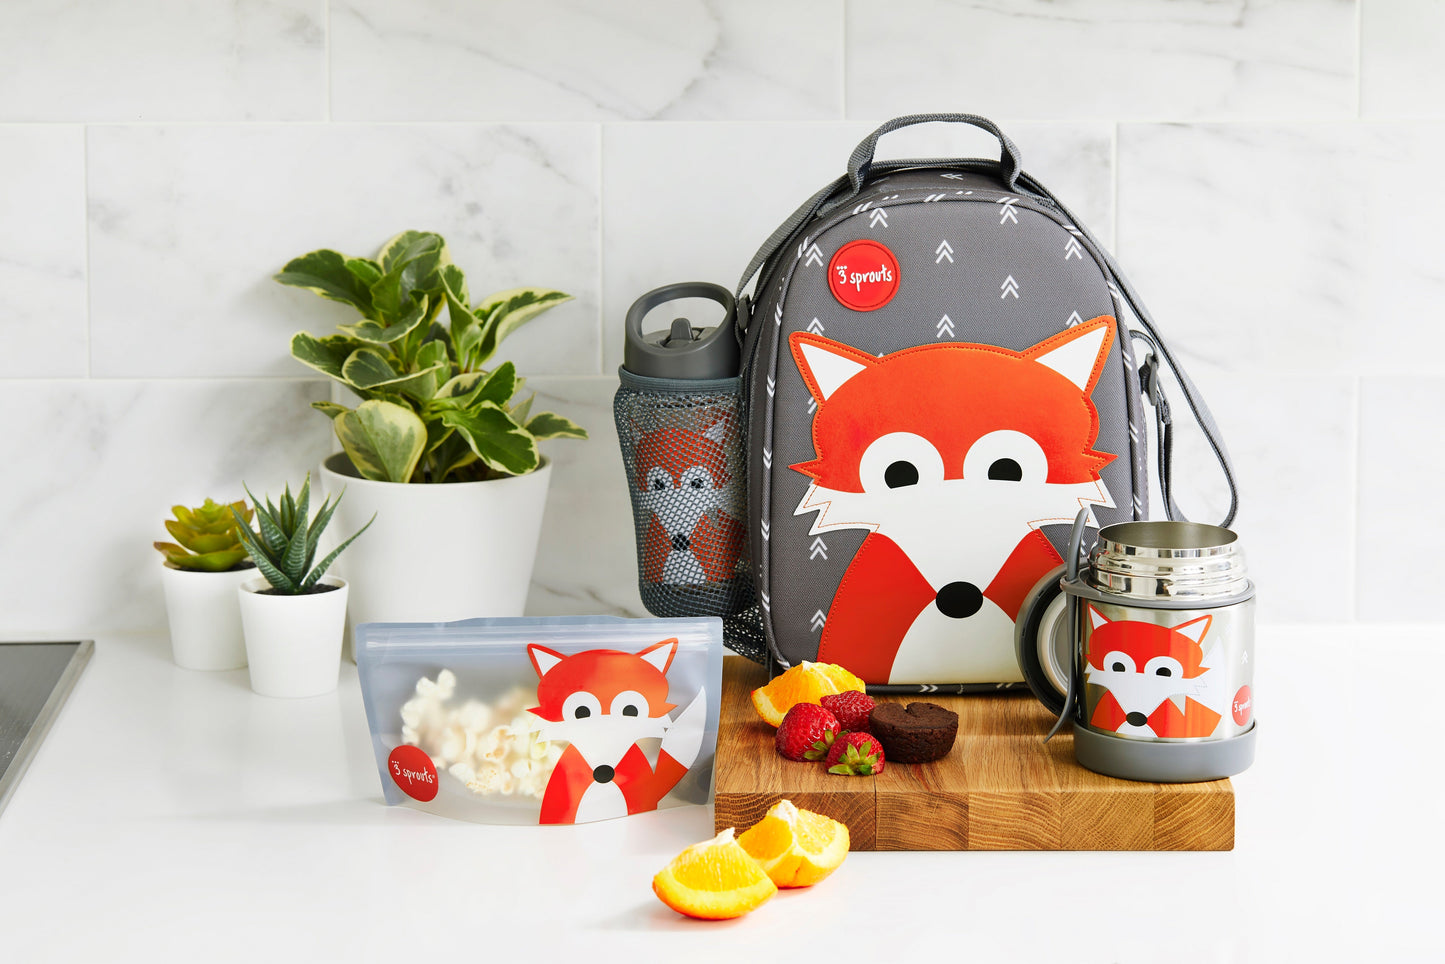 fox snack bag  (2 pack) - 12 packs